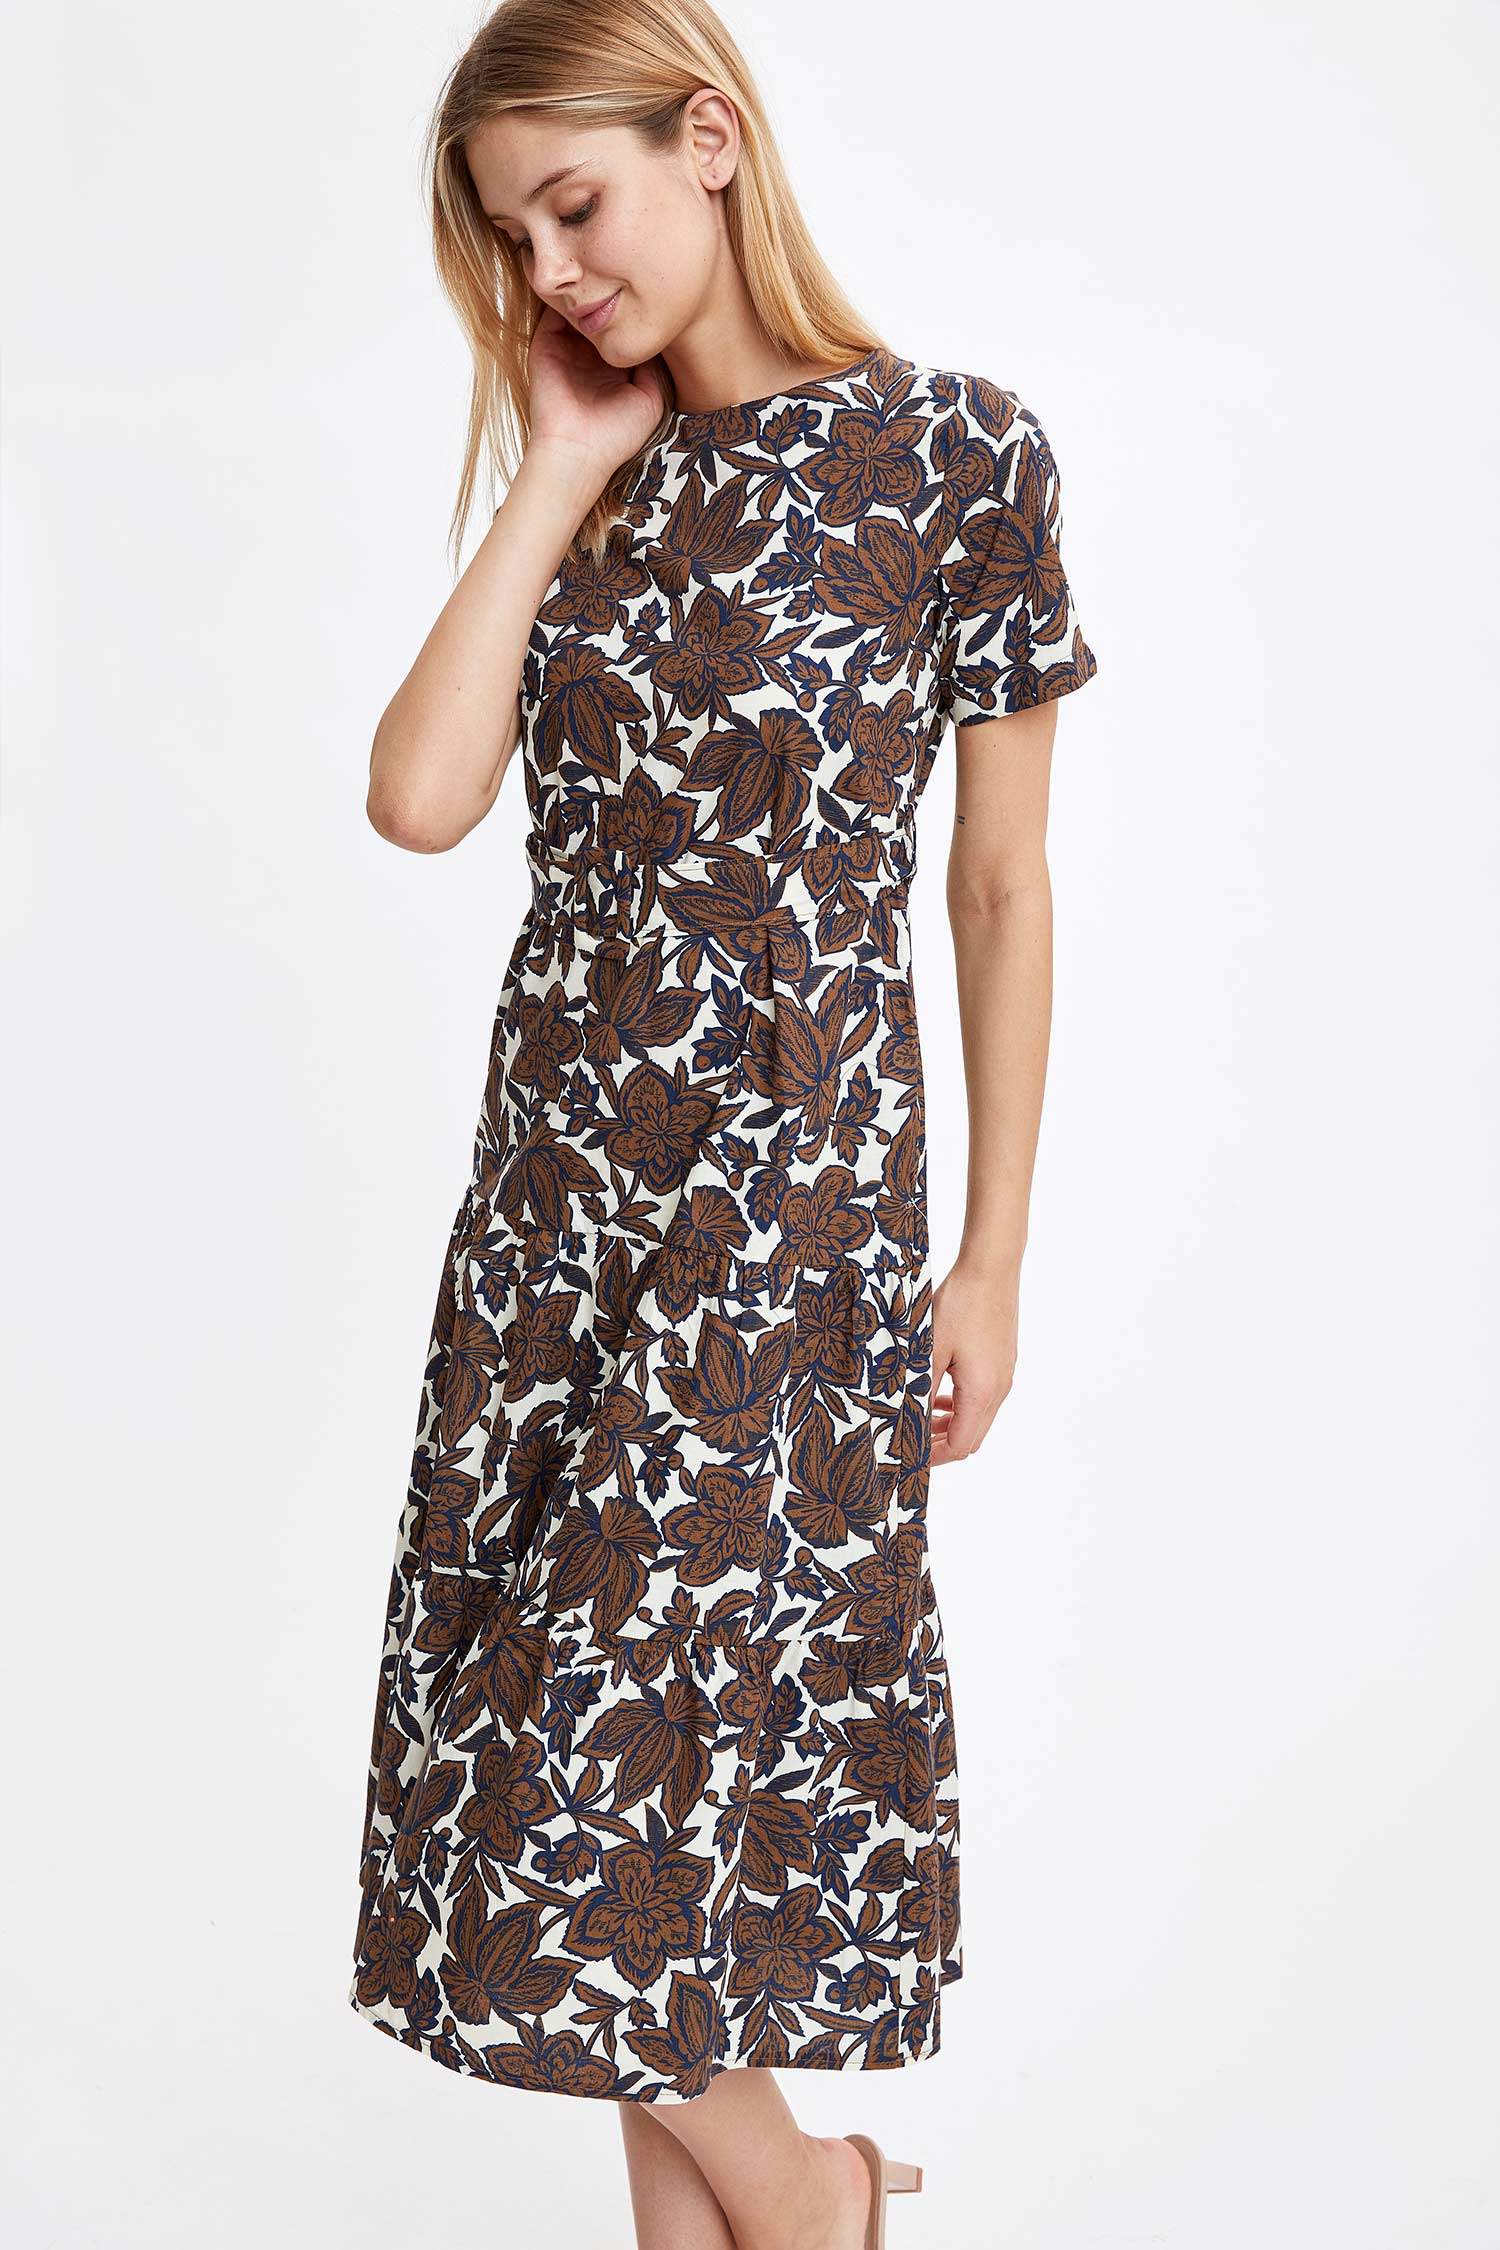 Brown WOMAN Long Sleeve Dress 1478214 | DeFacto